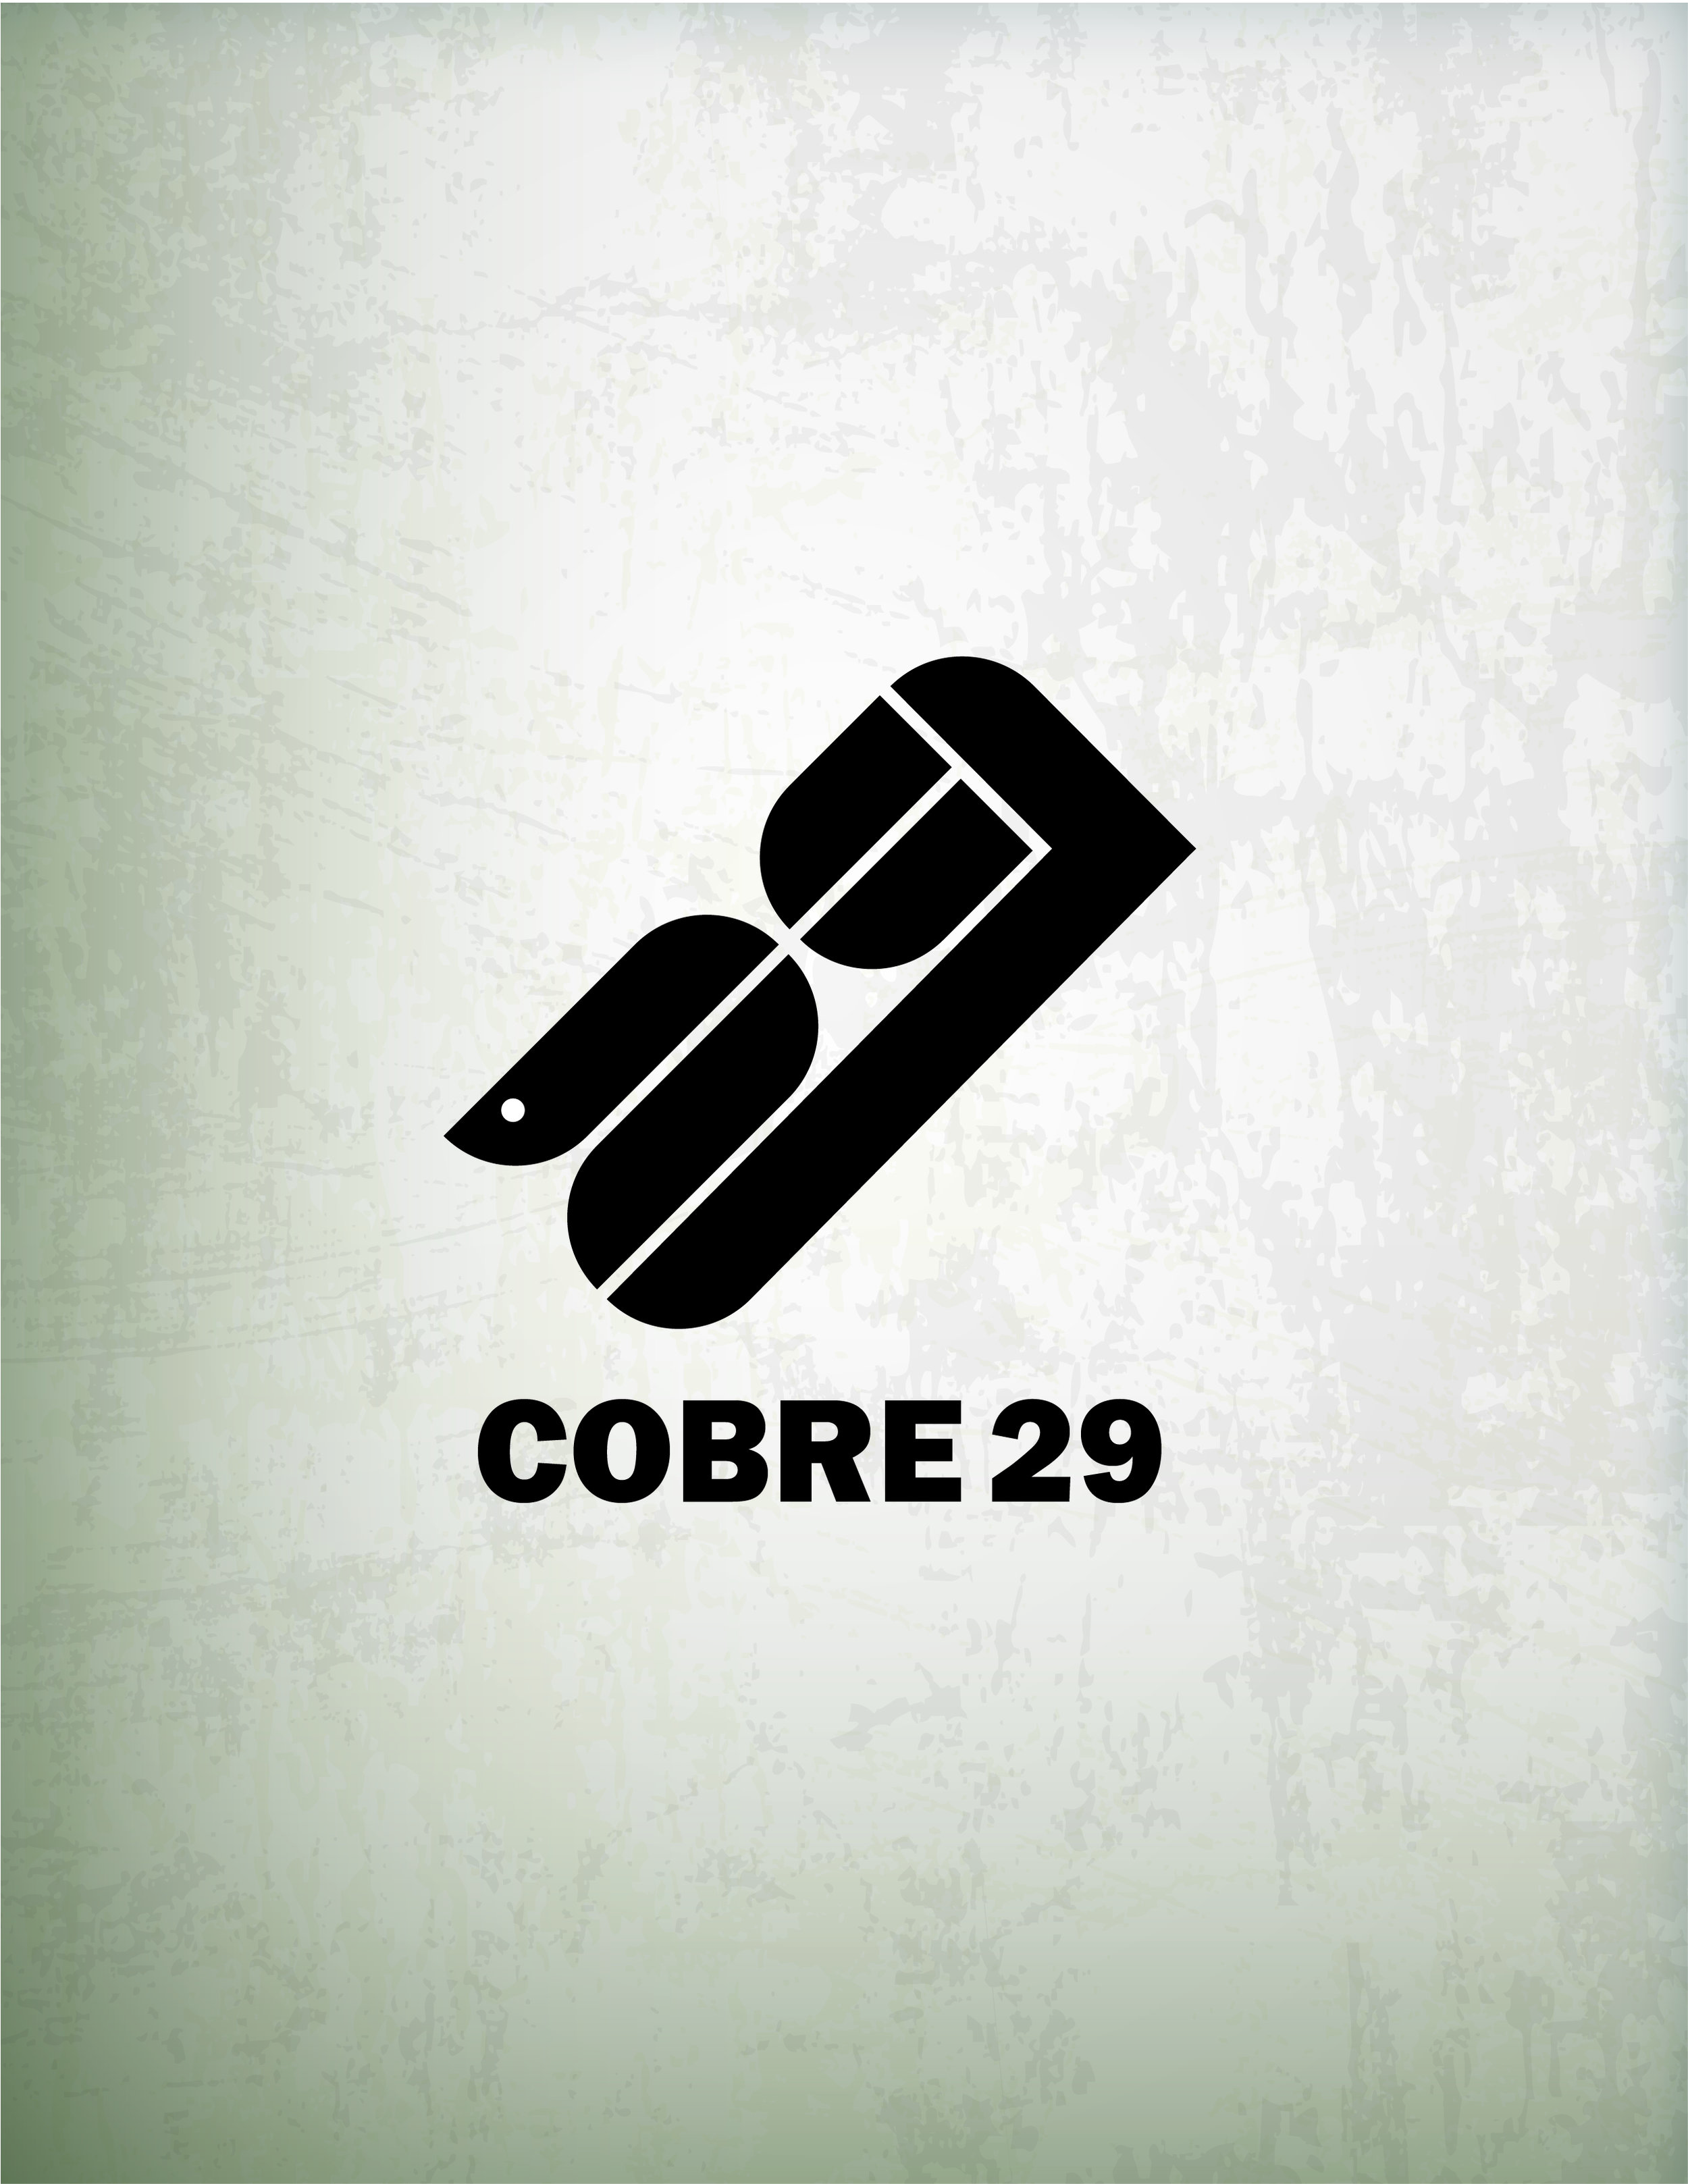 COBRE29_1-02.jpg